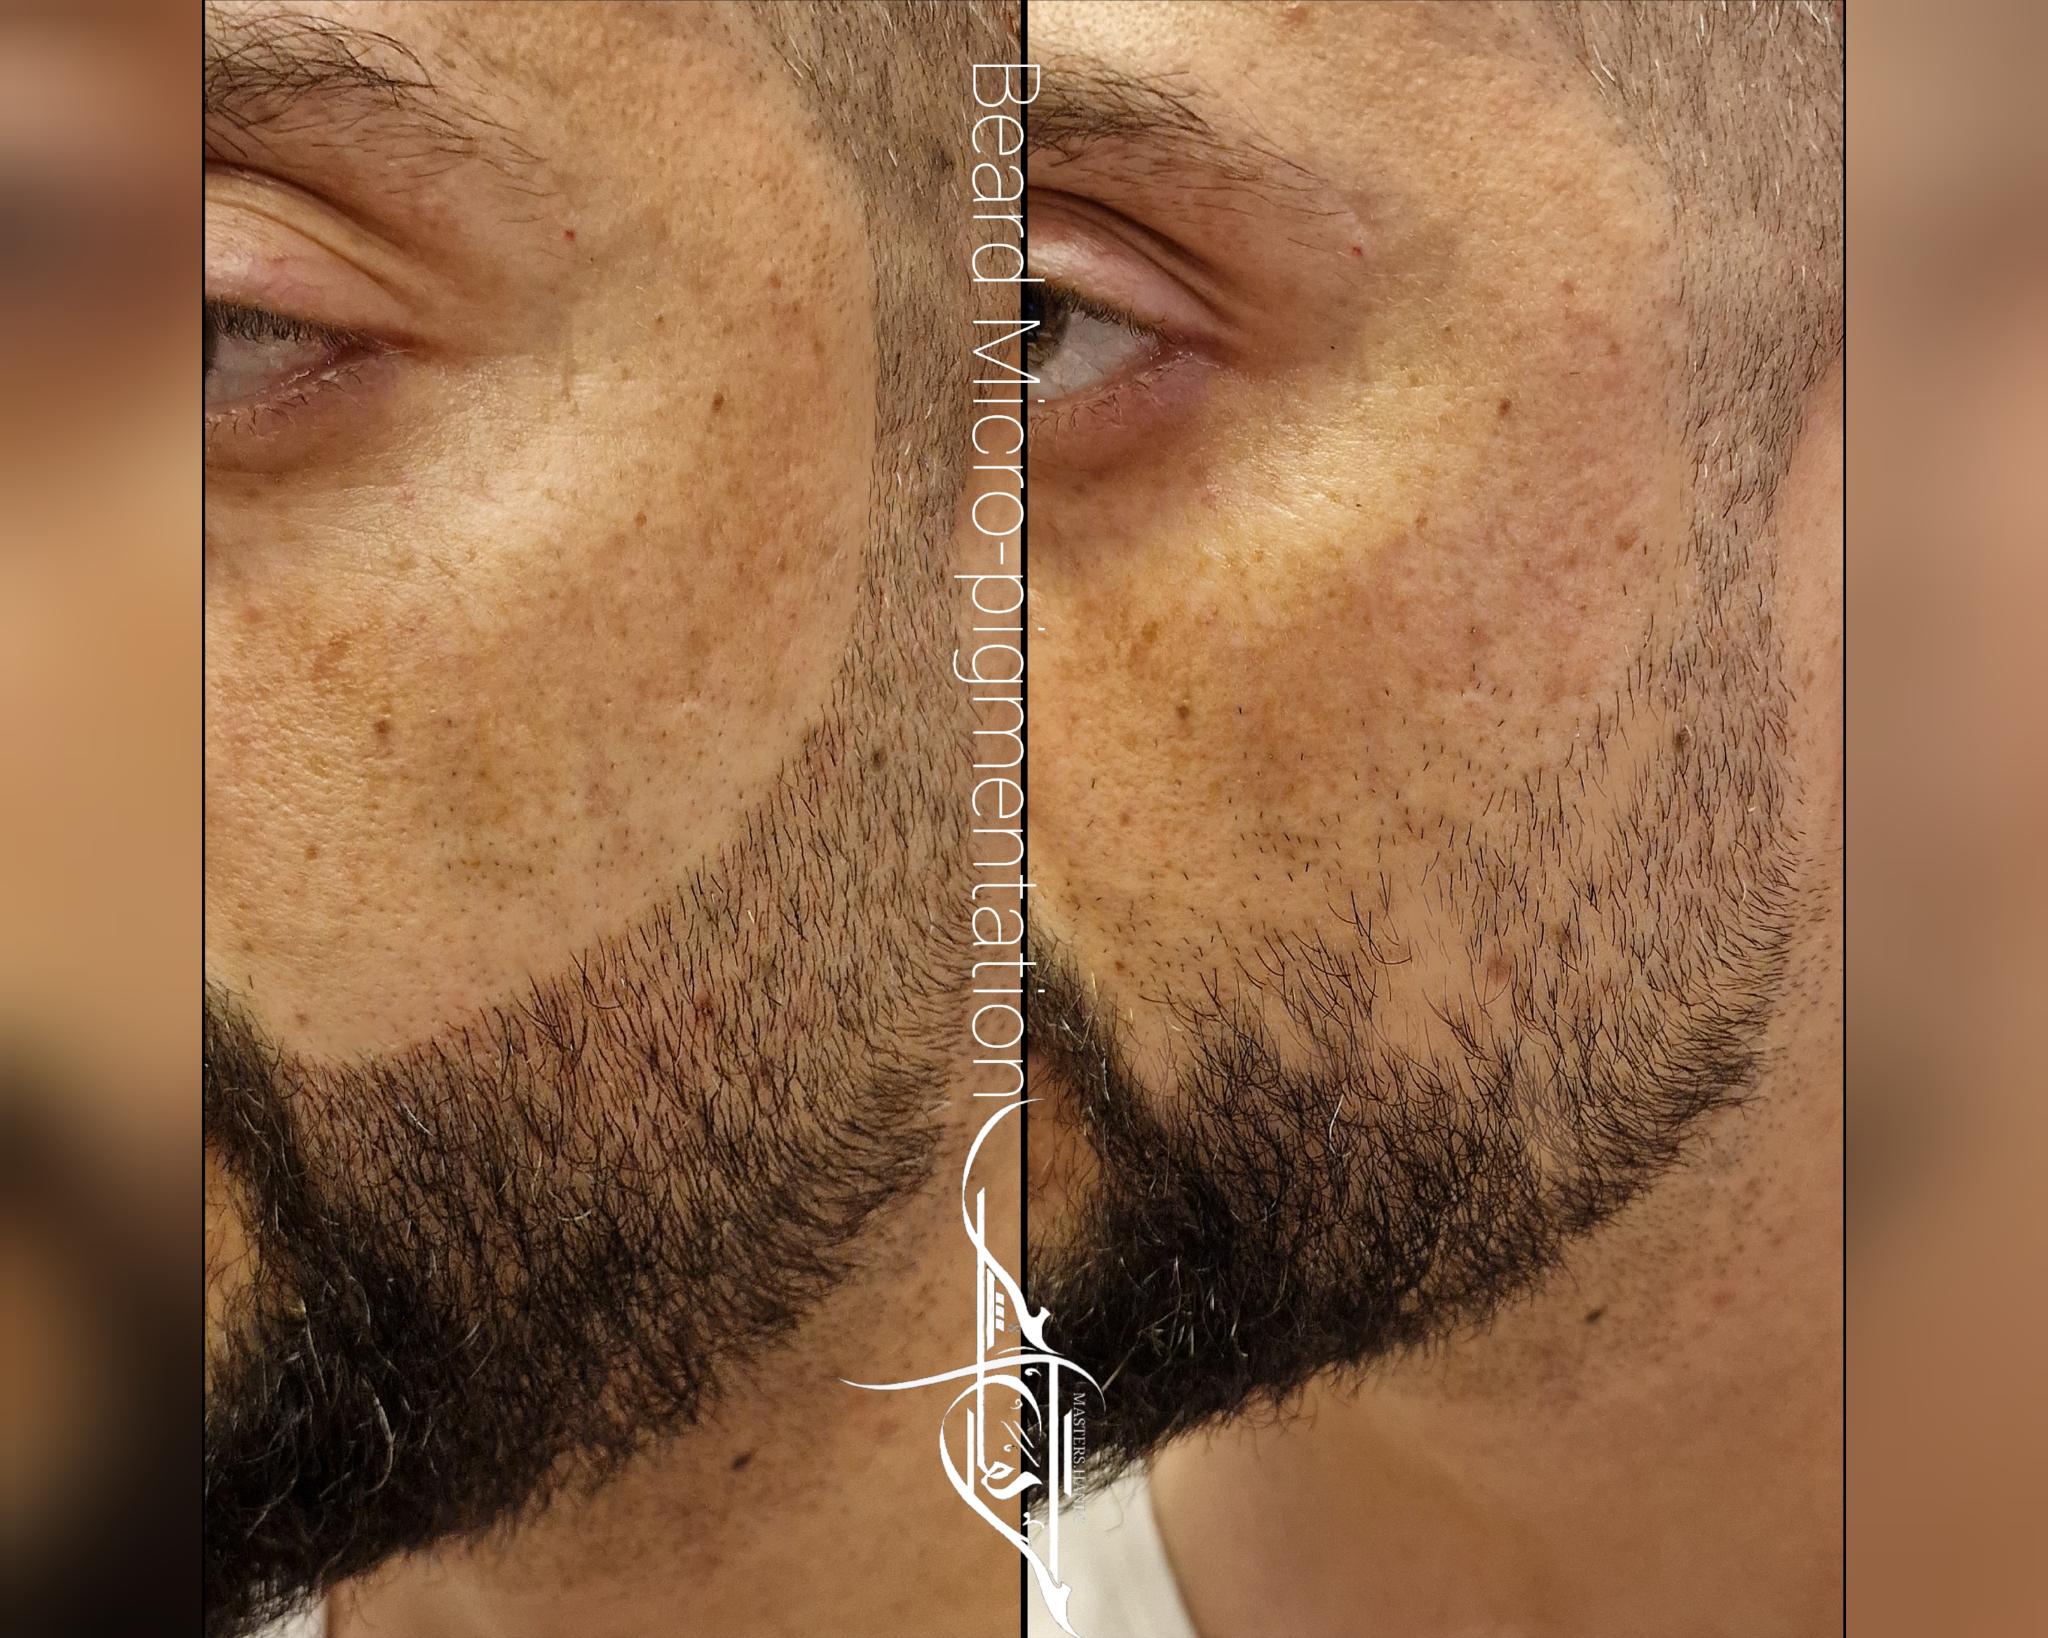 beard micropigmentation